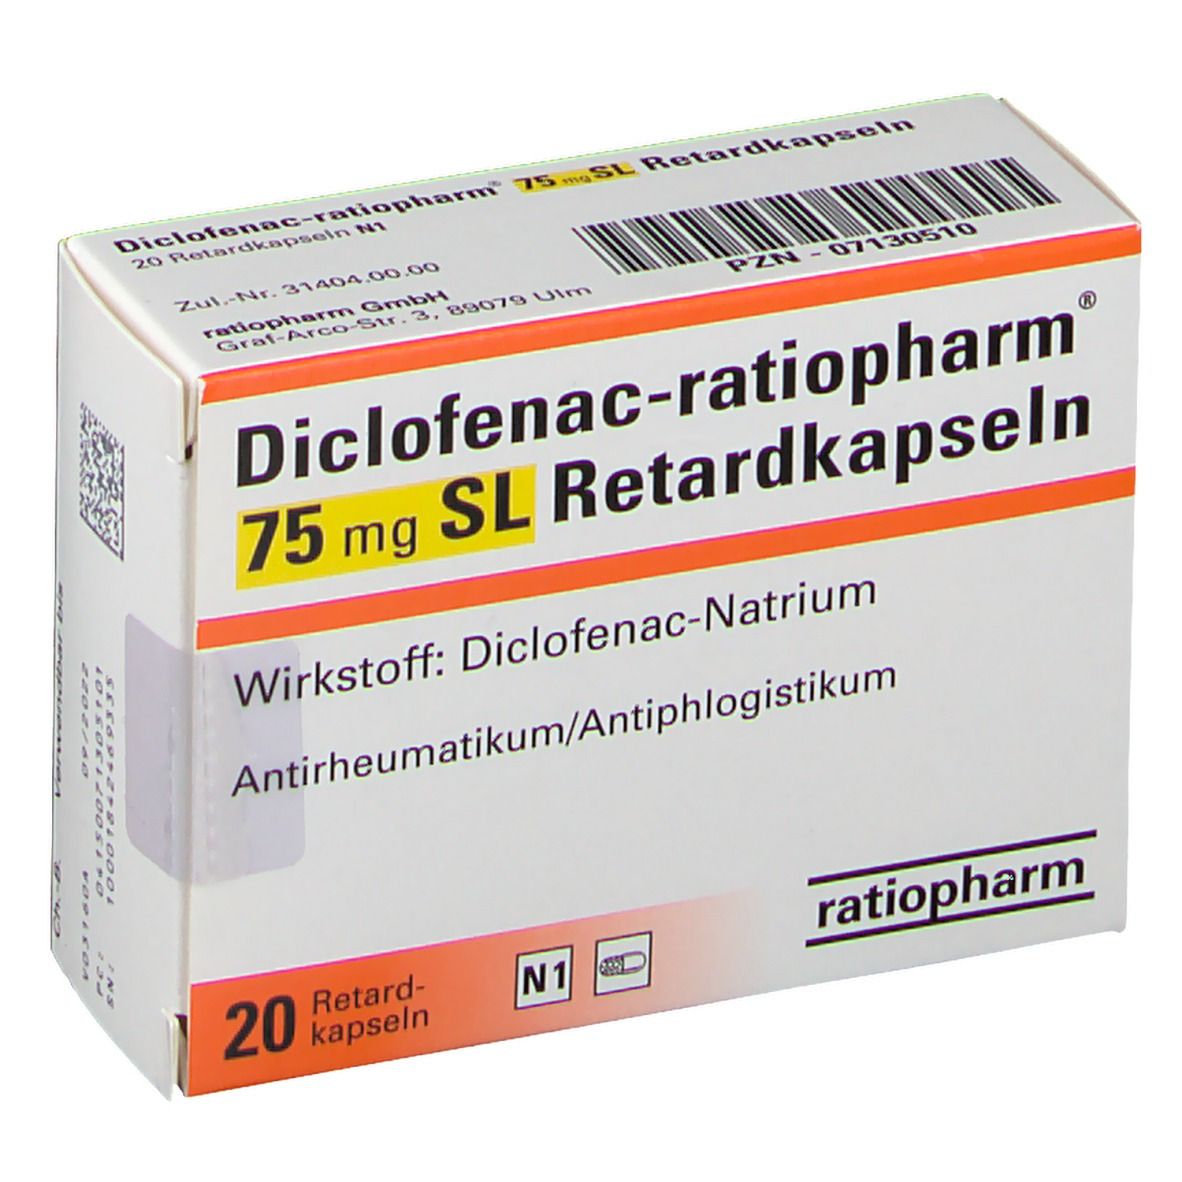 Diclofenac-ratiopharm® 75 mg SL